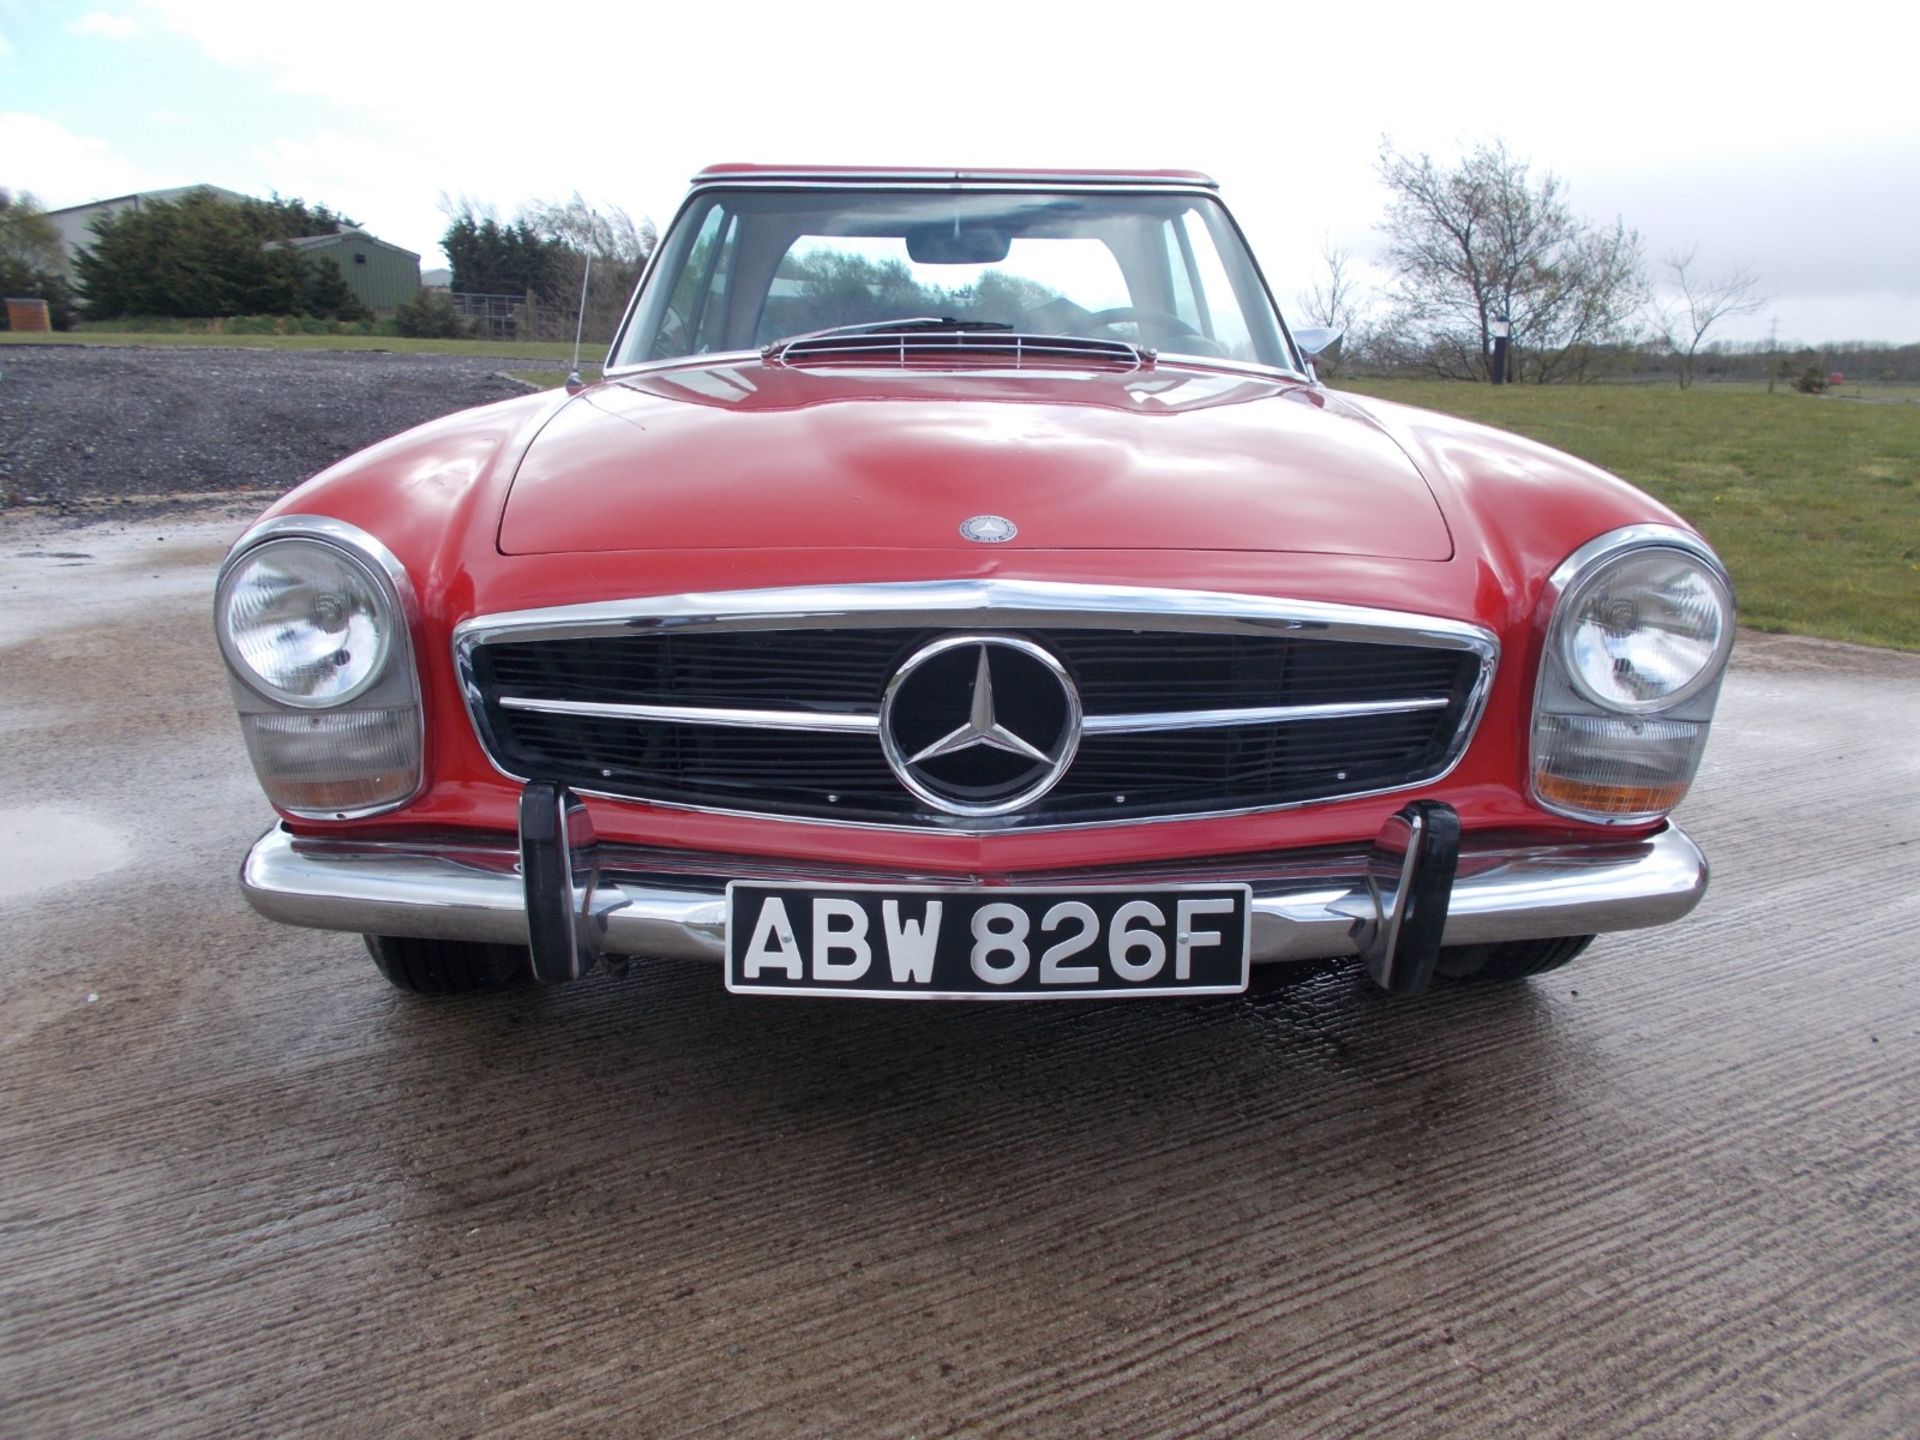 1968 (F) MERCEDES 250SL R107,2.5 LITRE PETROL AUTOMATIC, LEFT HAND DRIVE, FULLY UK REGISTERED*NO VAT - Image 2 of 38